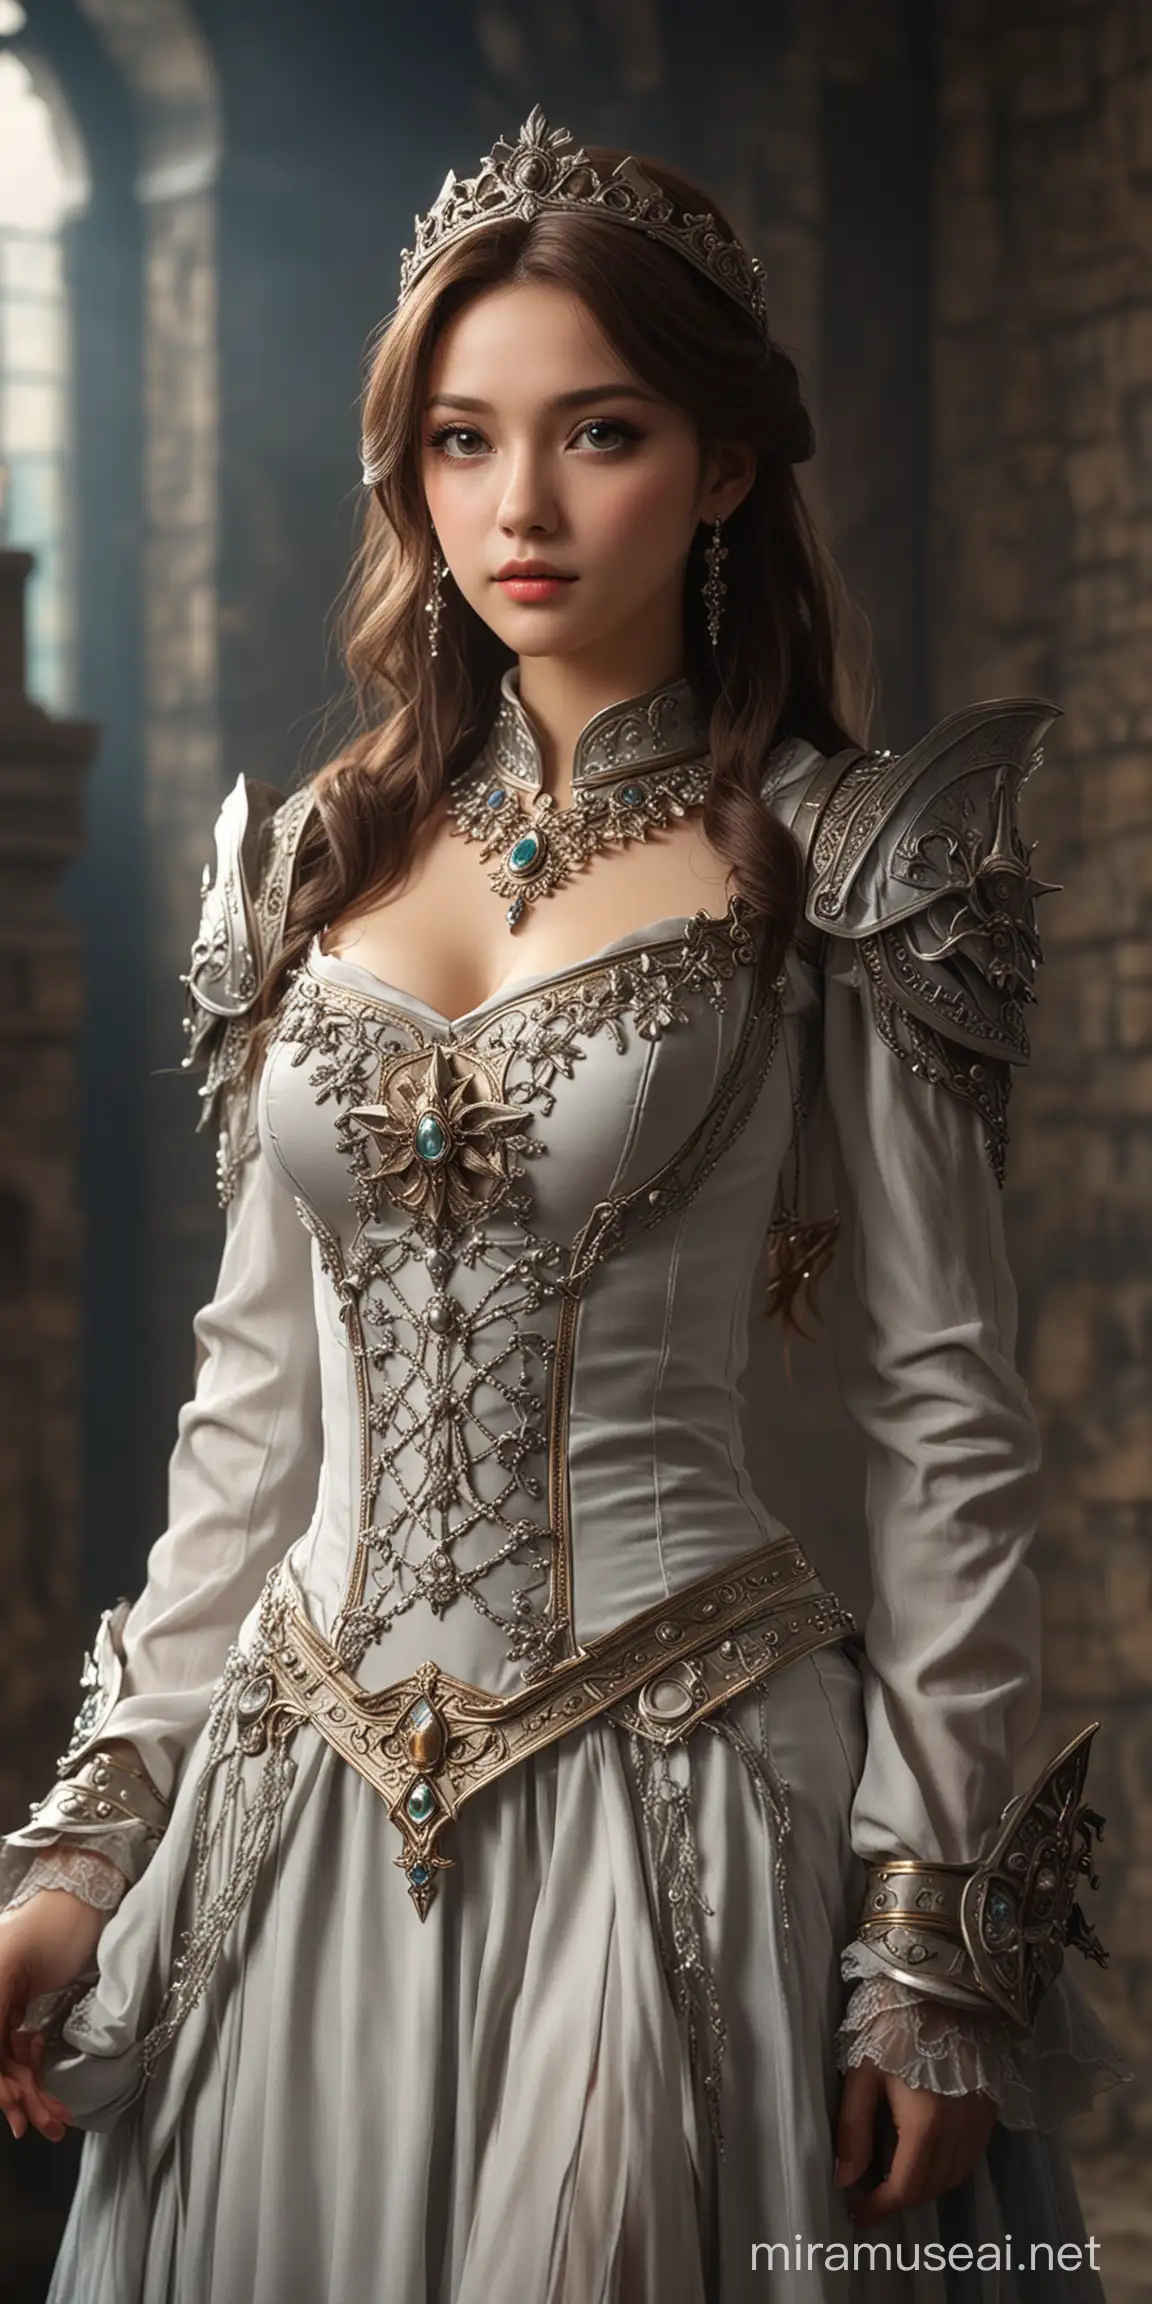 Beautiful Fairy Commander at Castle Studio